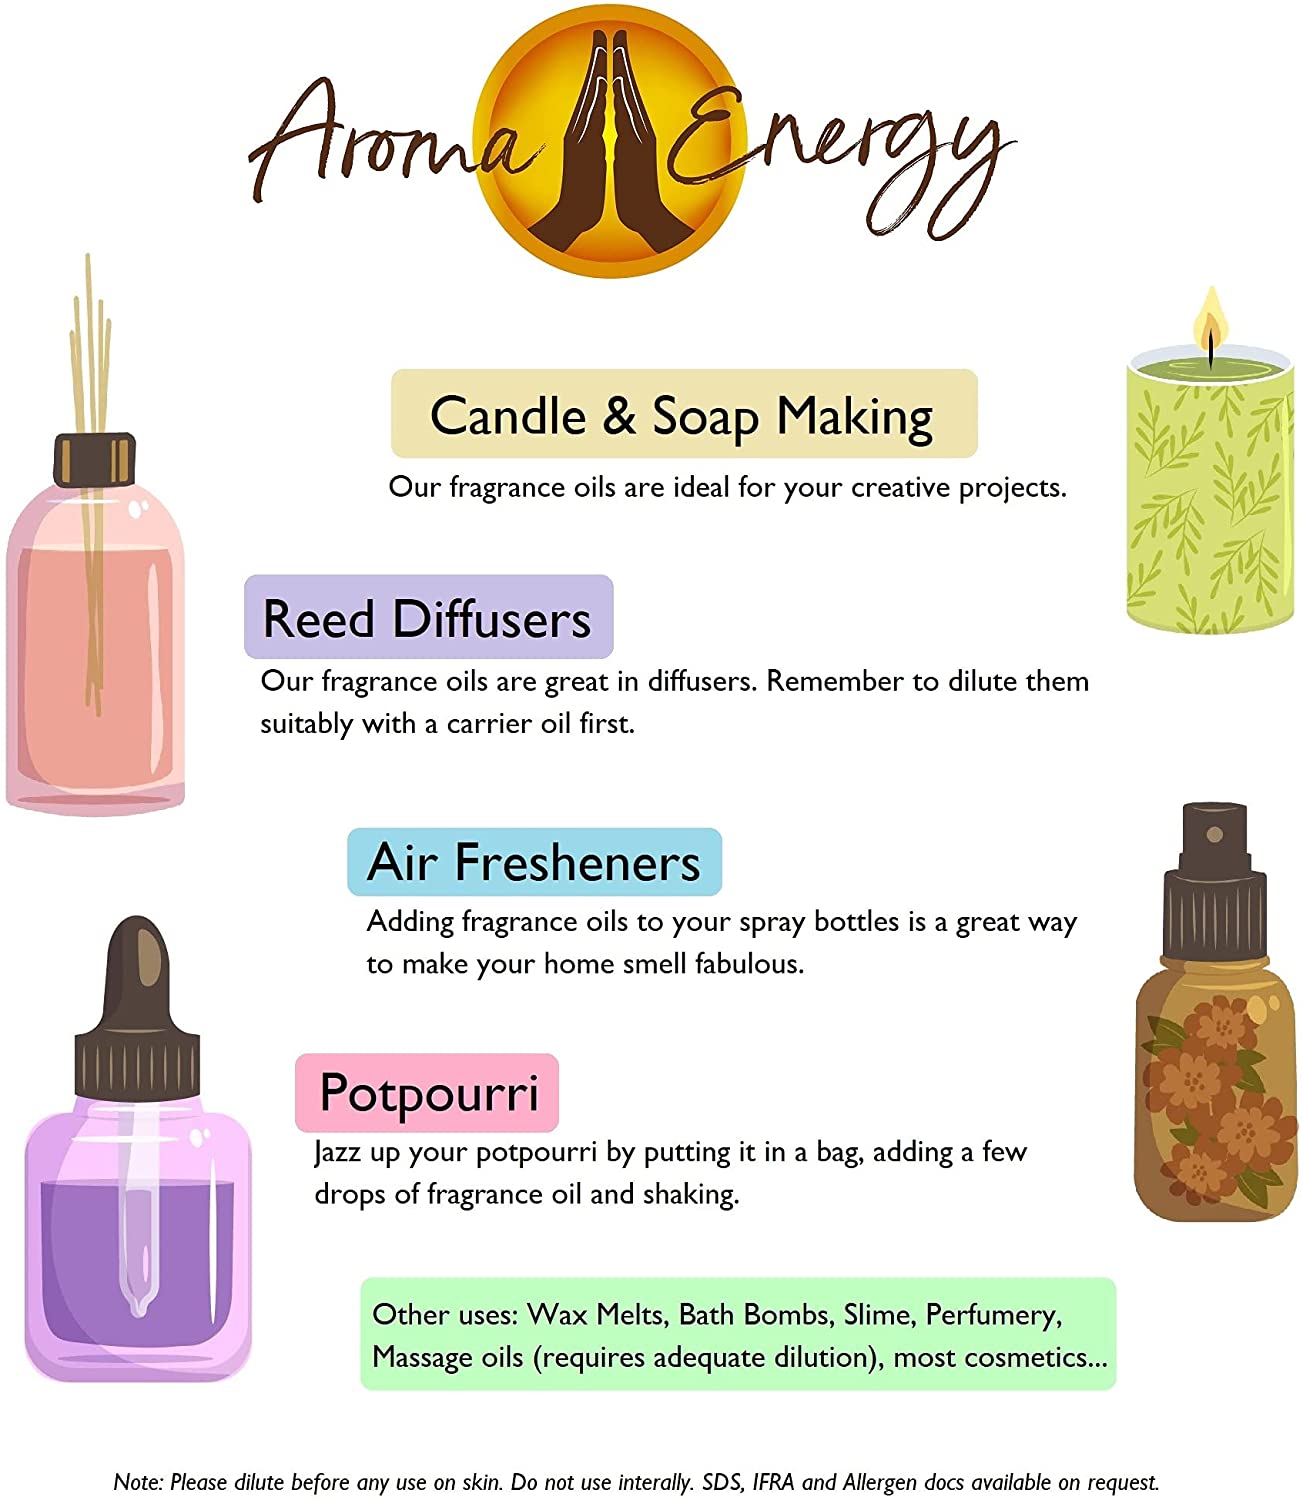 Marshmallow Fragrance Oil - Aroma Energy